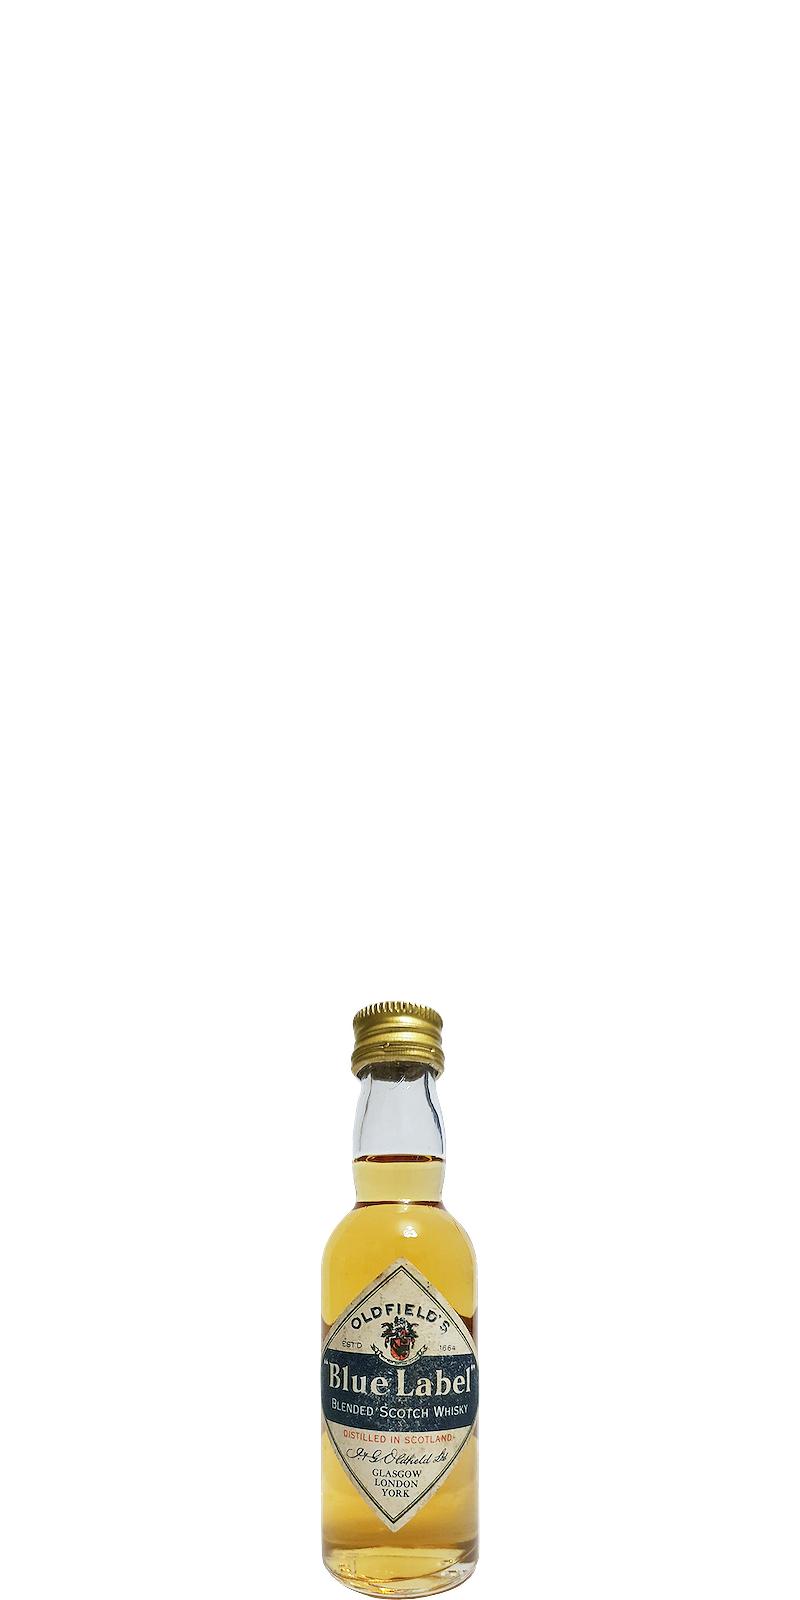 Oldfield's Blue Label Blended Scotch Whisky